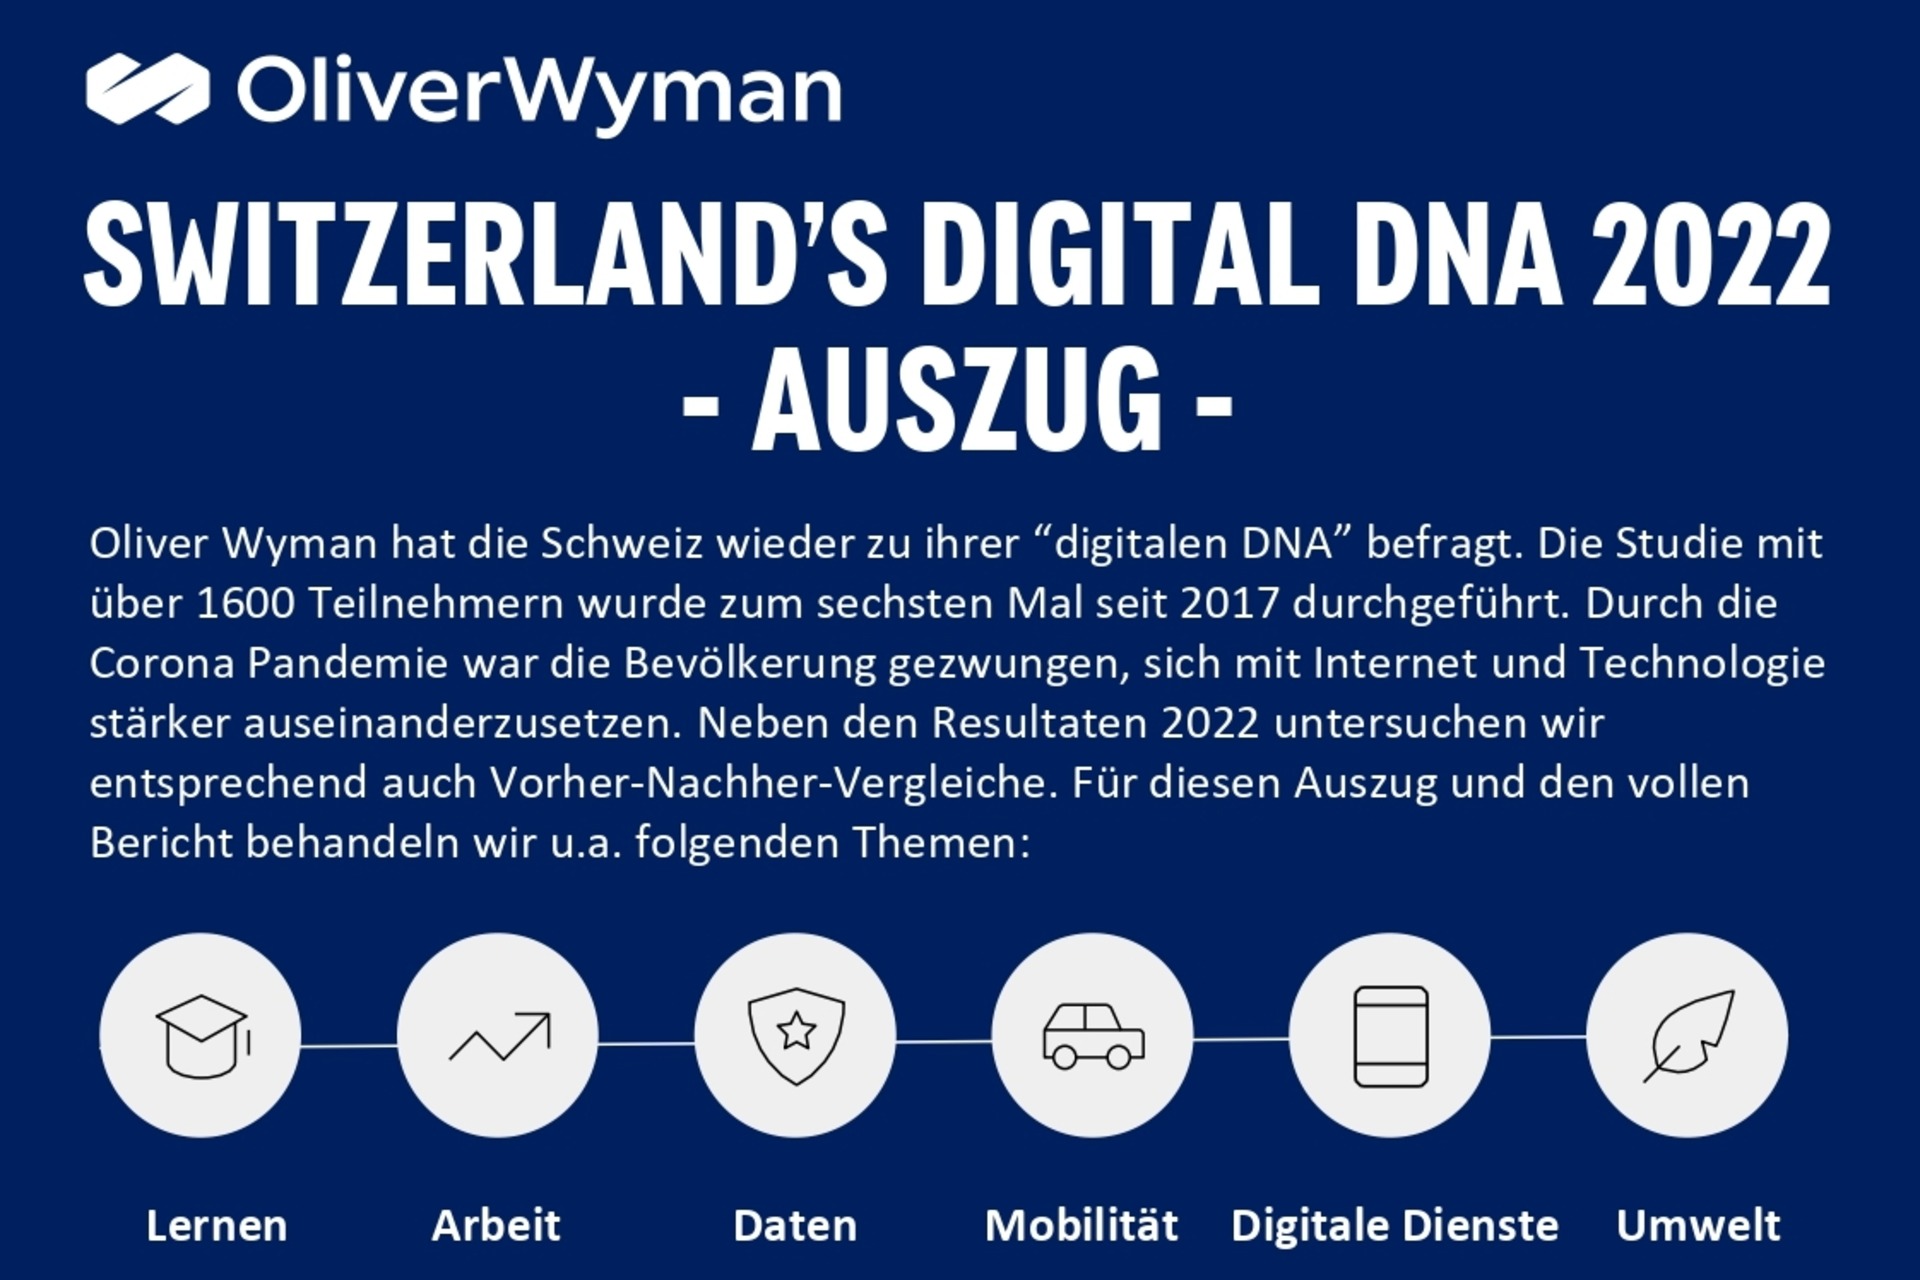 奧緯諮詢 (Oliver Wyman) 和 digitalswitzerland 合作的“瑞士數字 DNA”調查信息圖表首頁頂部